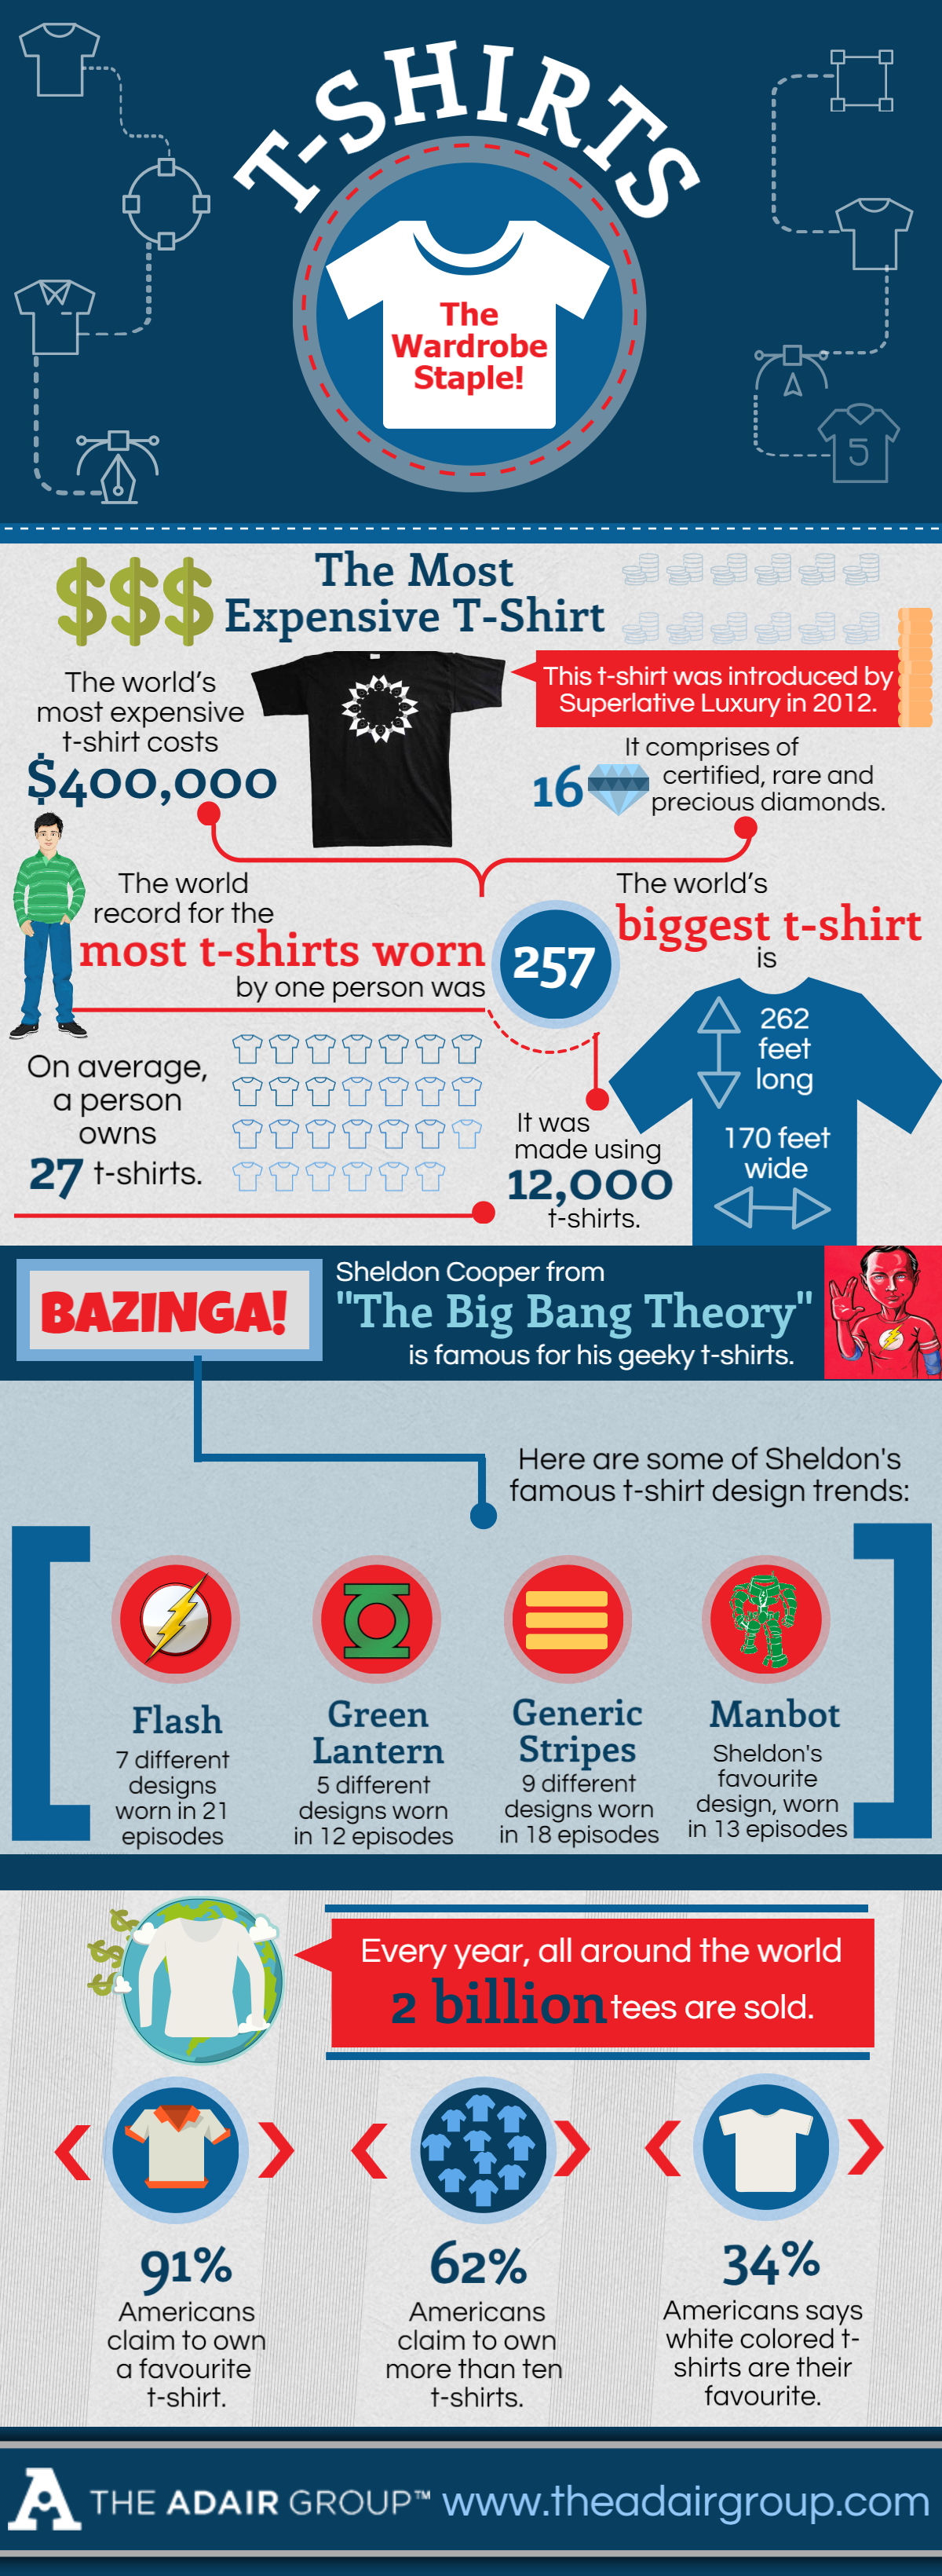 T-Shirts: The Wardrobe Staple